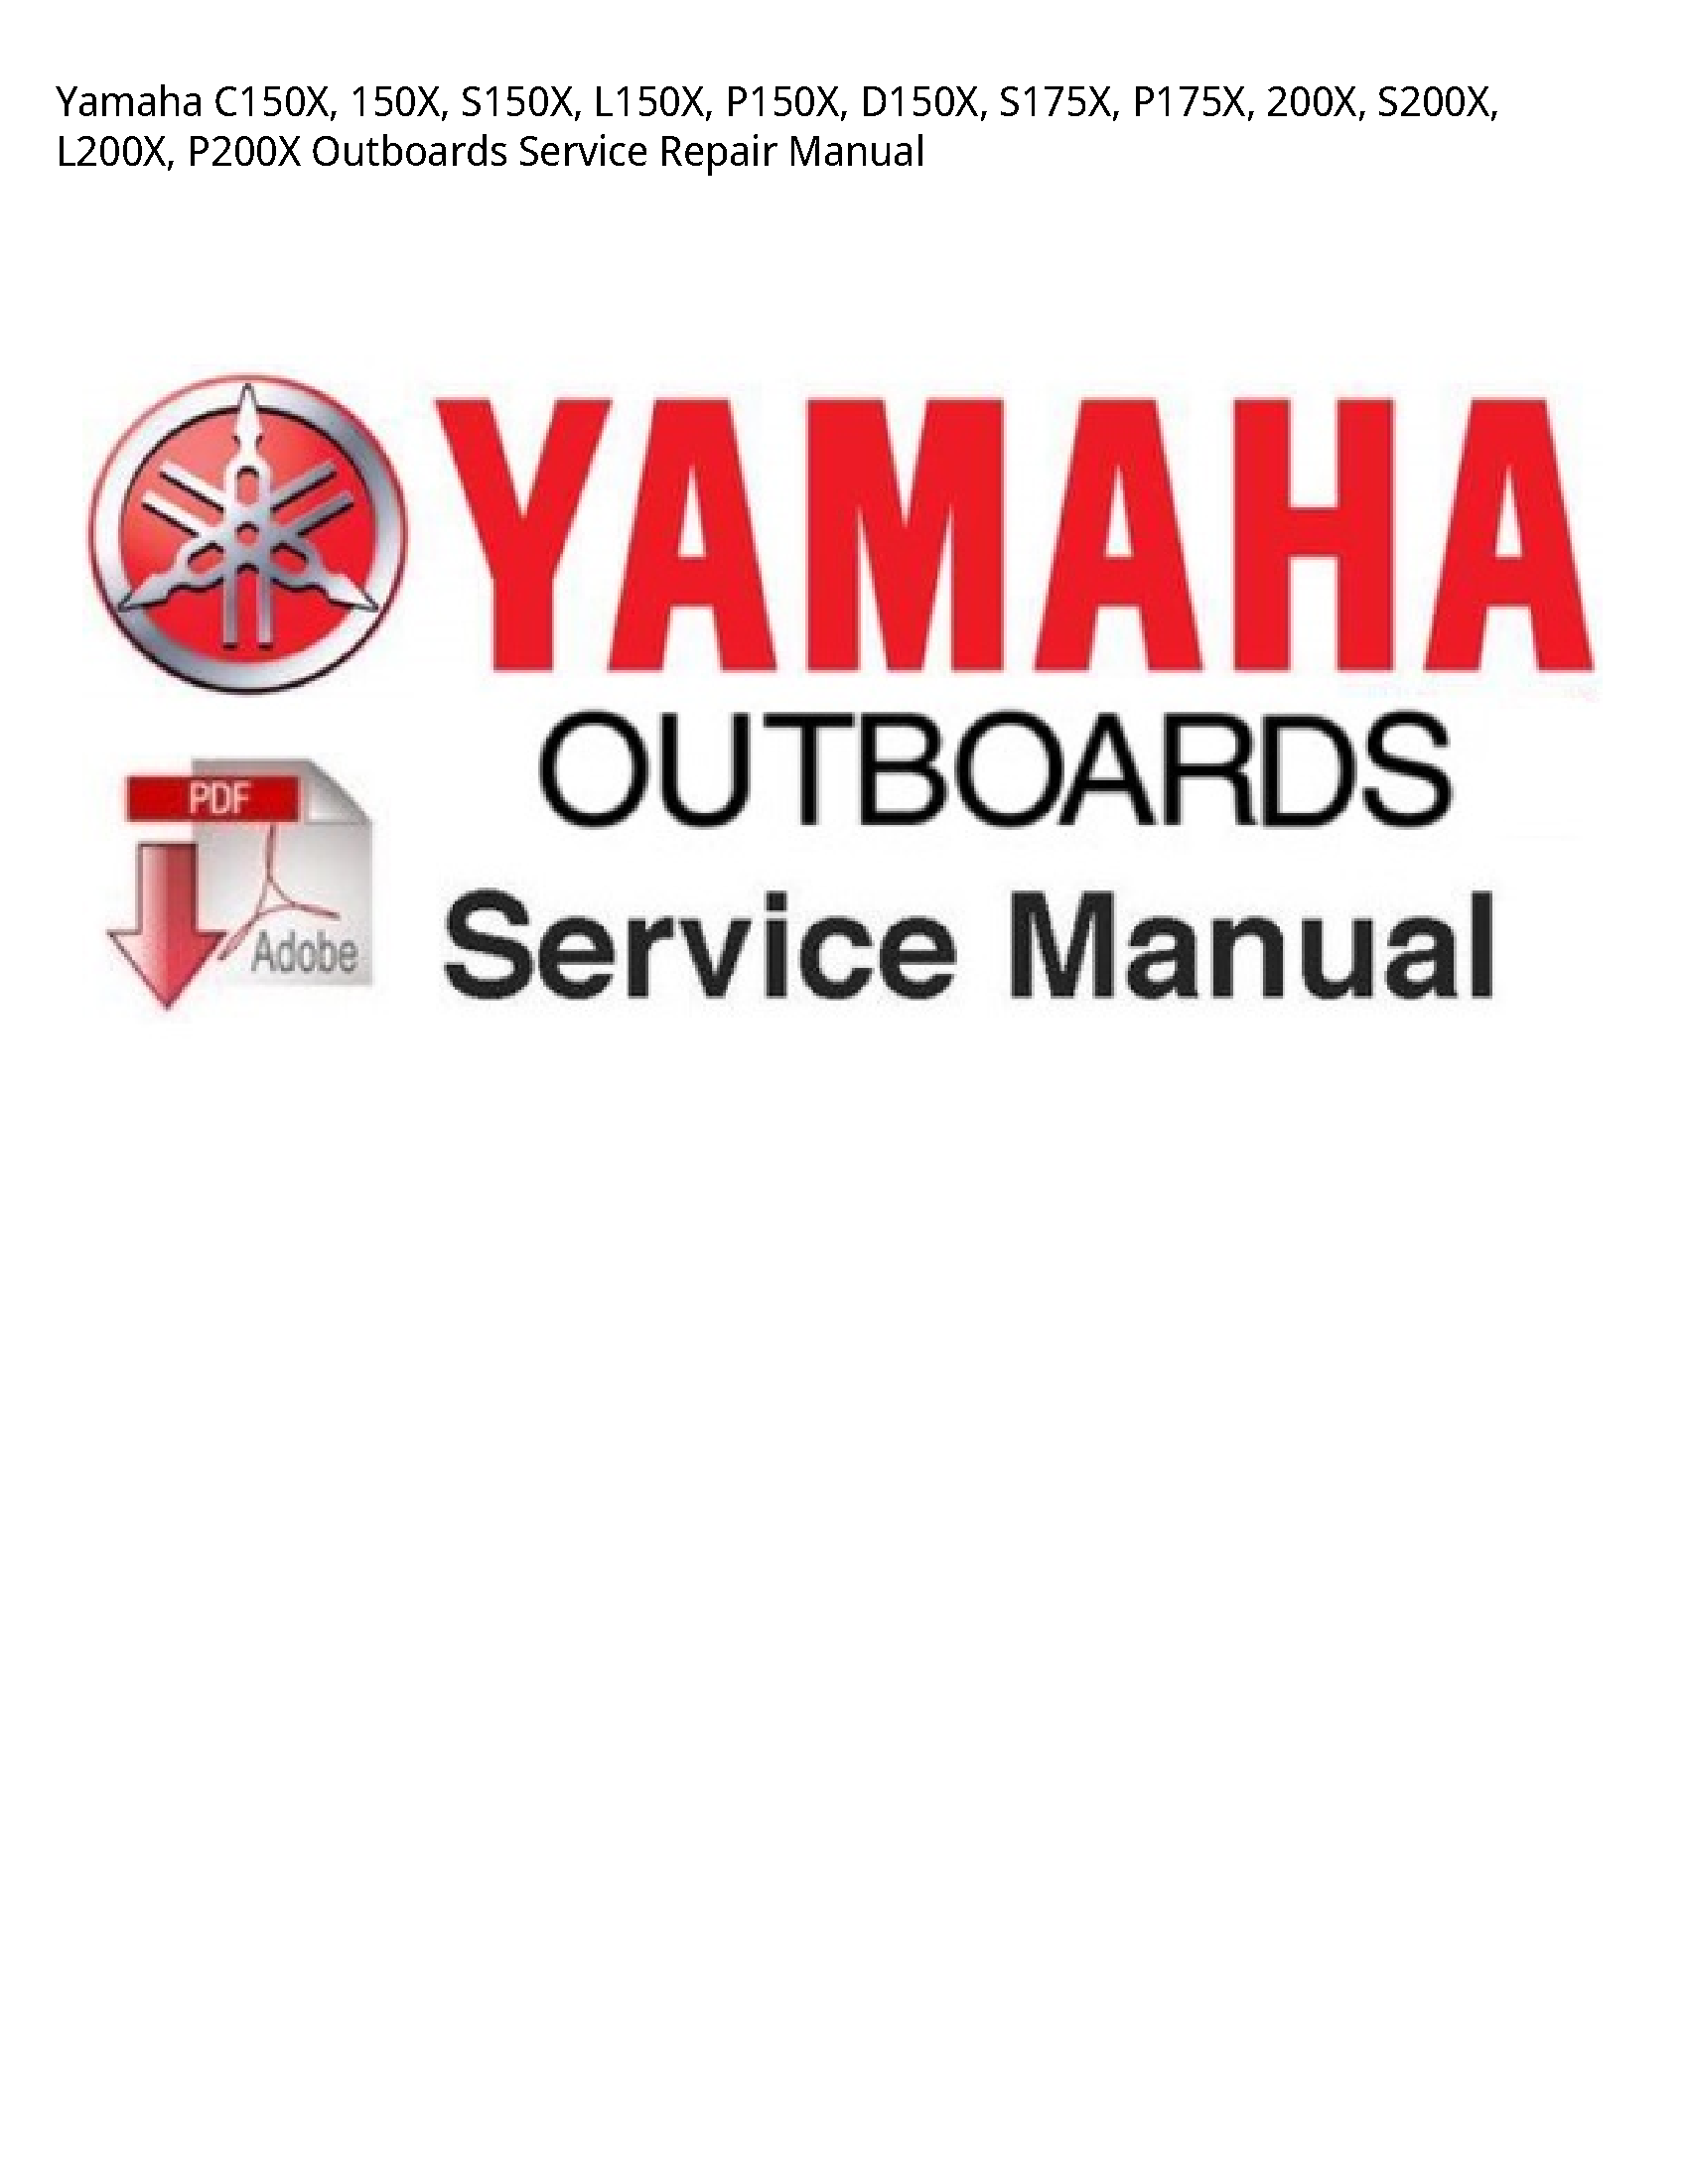 Yamaha C150X Outboards manual